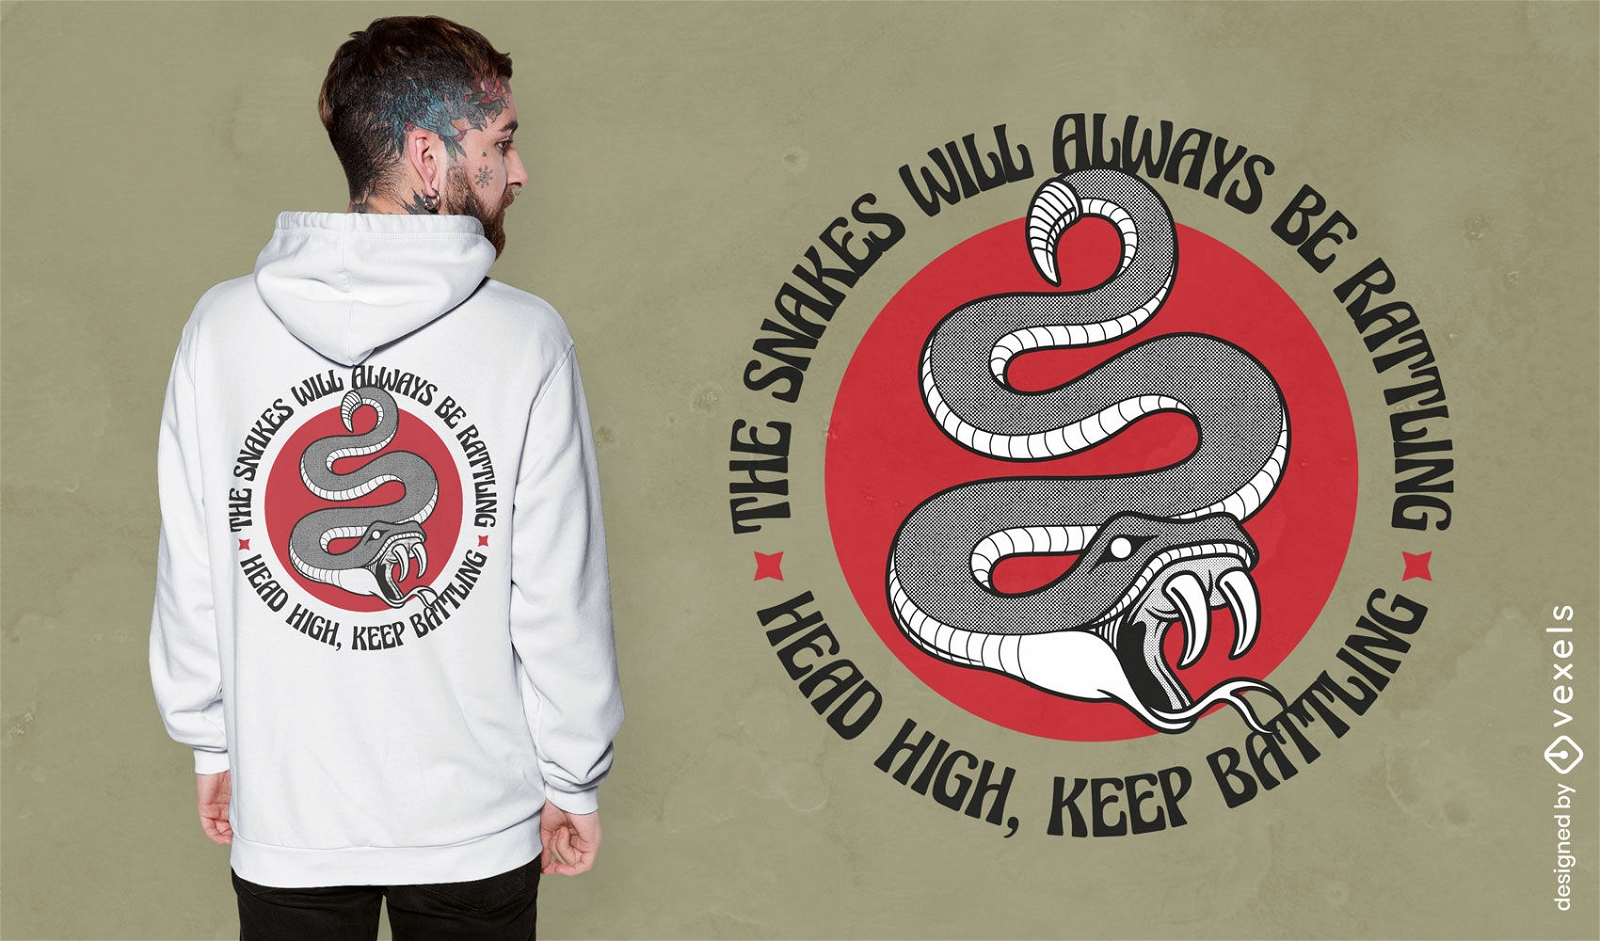 Snake reptilian animal attack t-shirt design